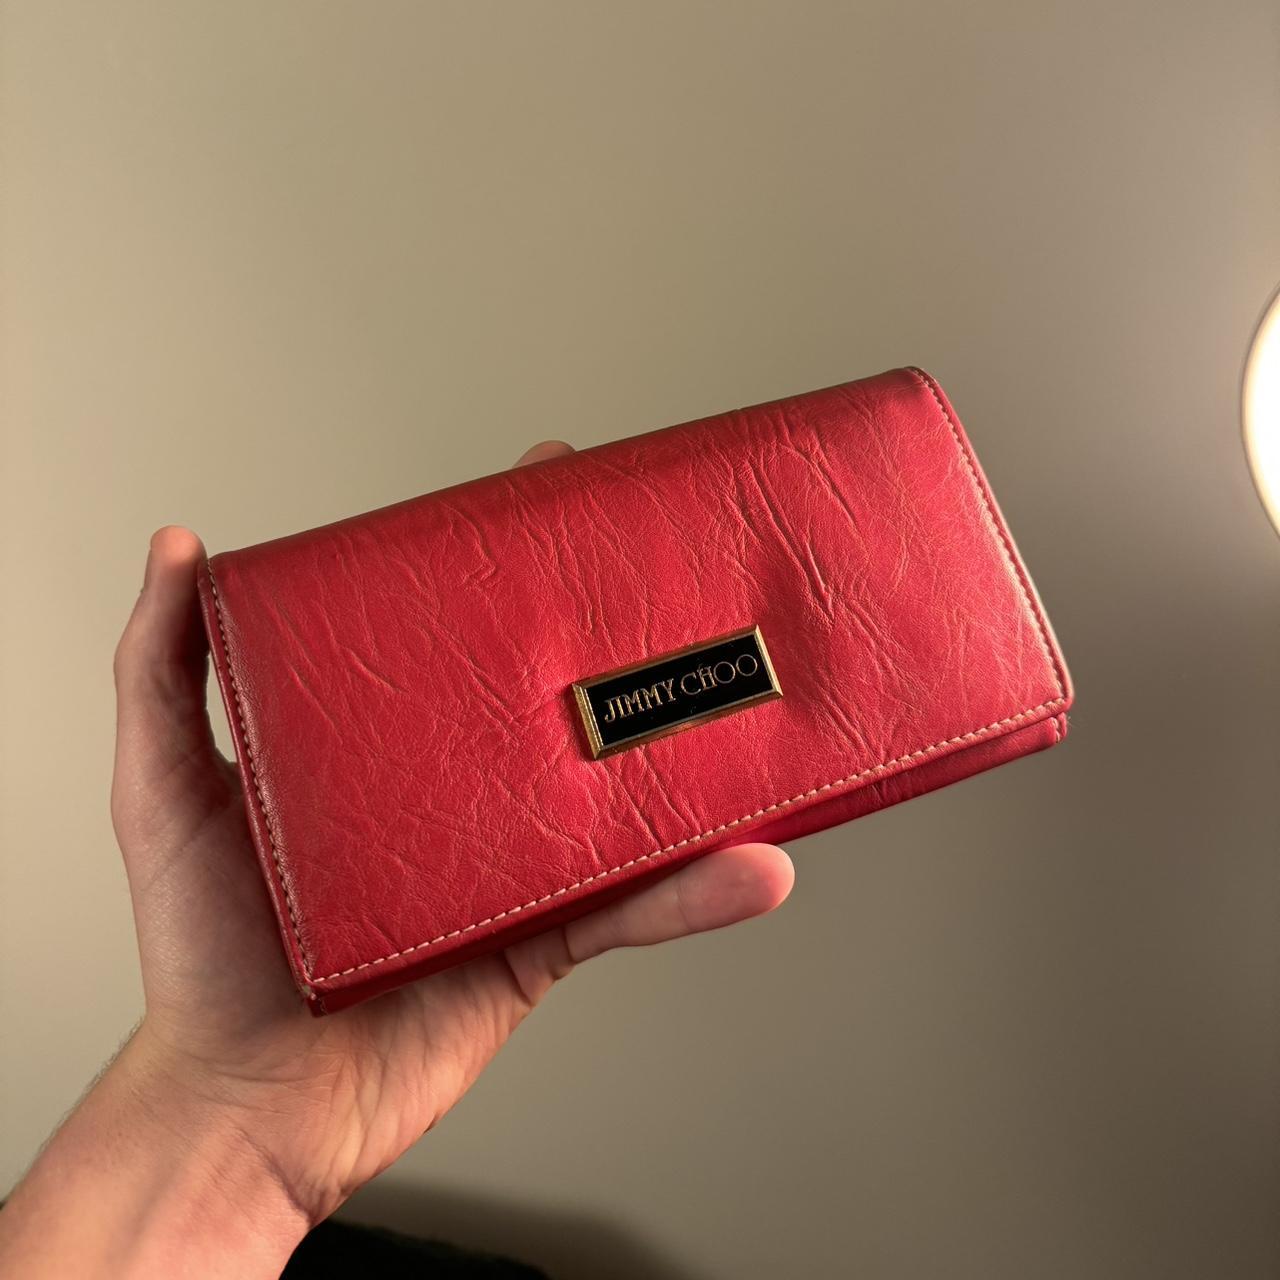 Elegant Red Leather Jimmy Choo Bag